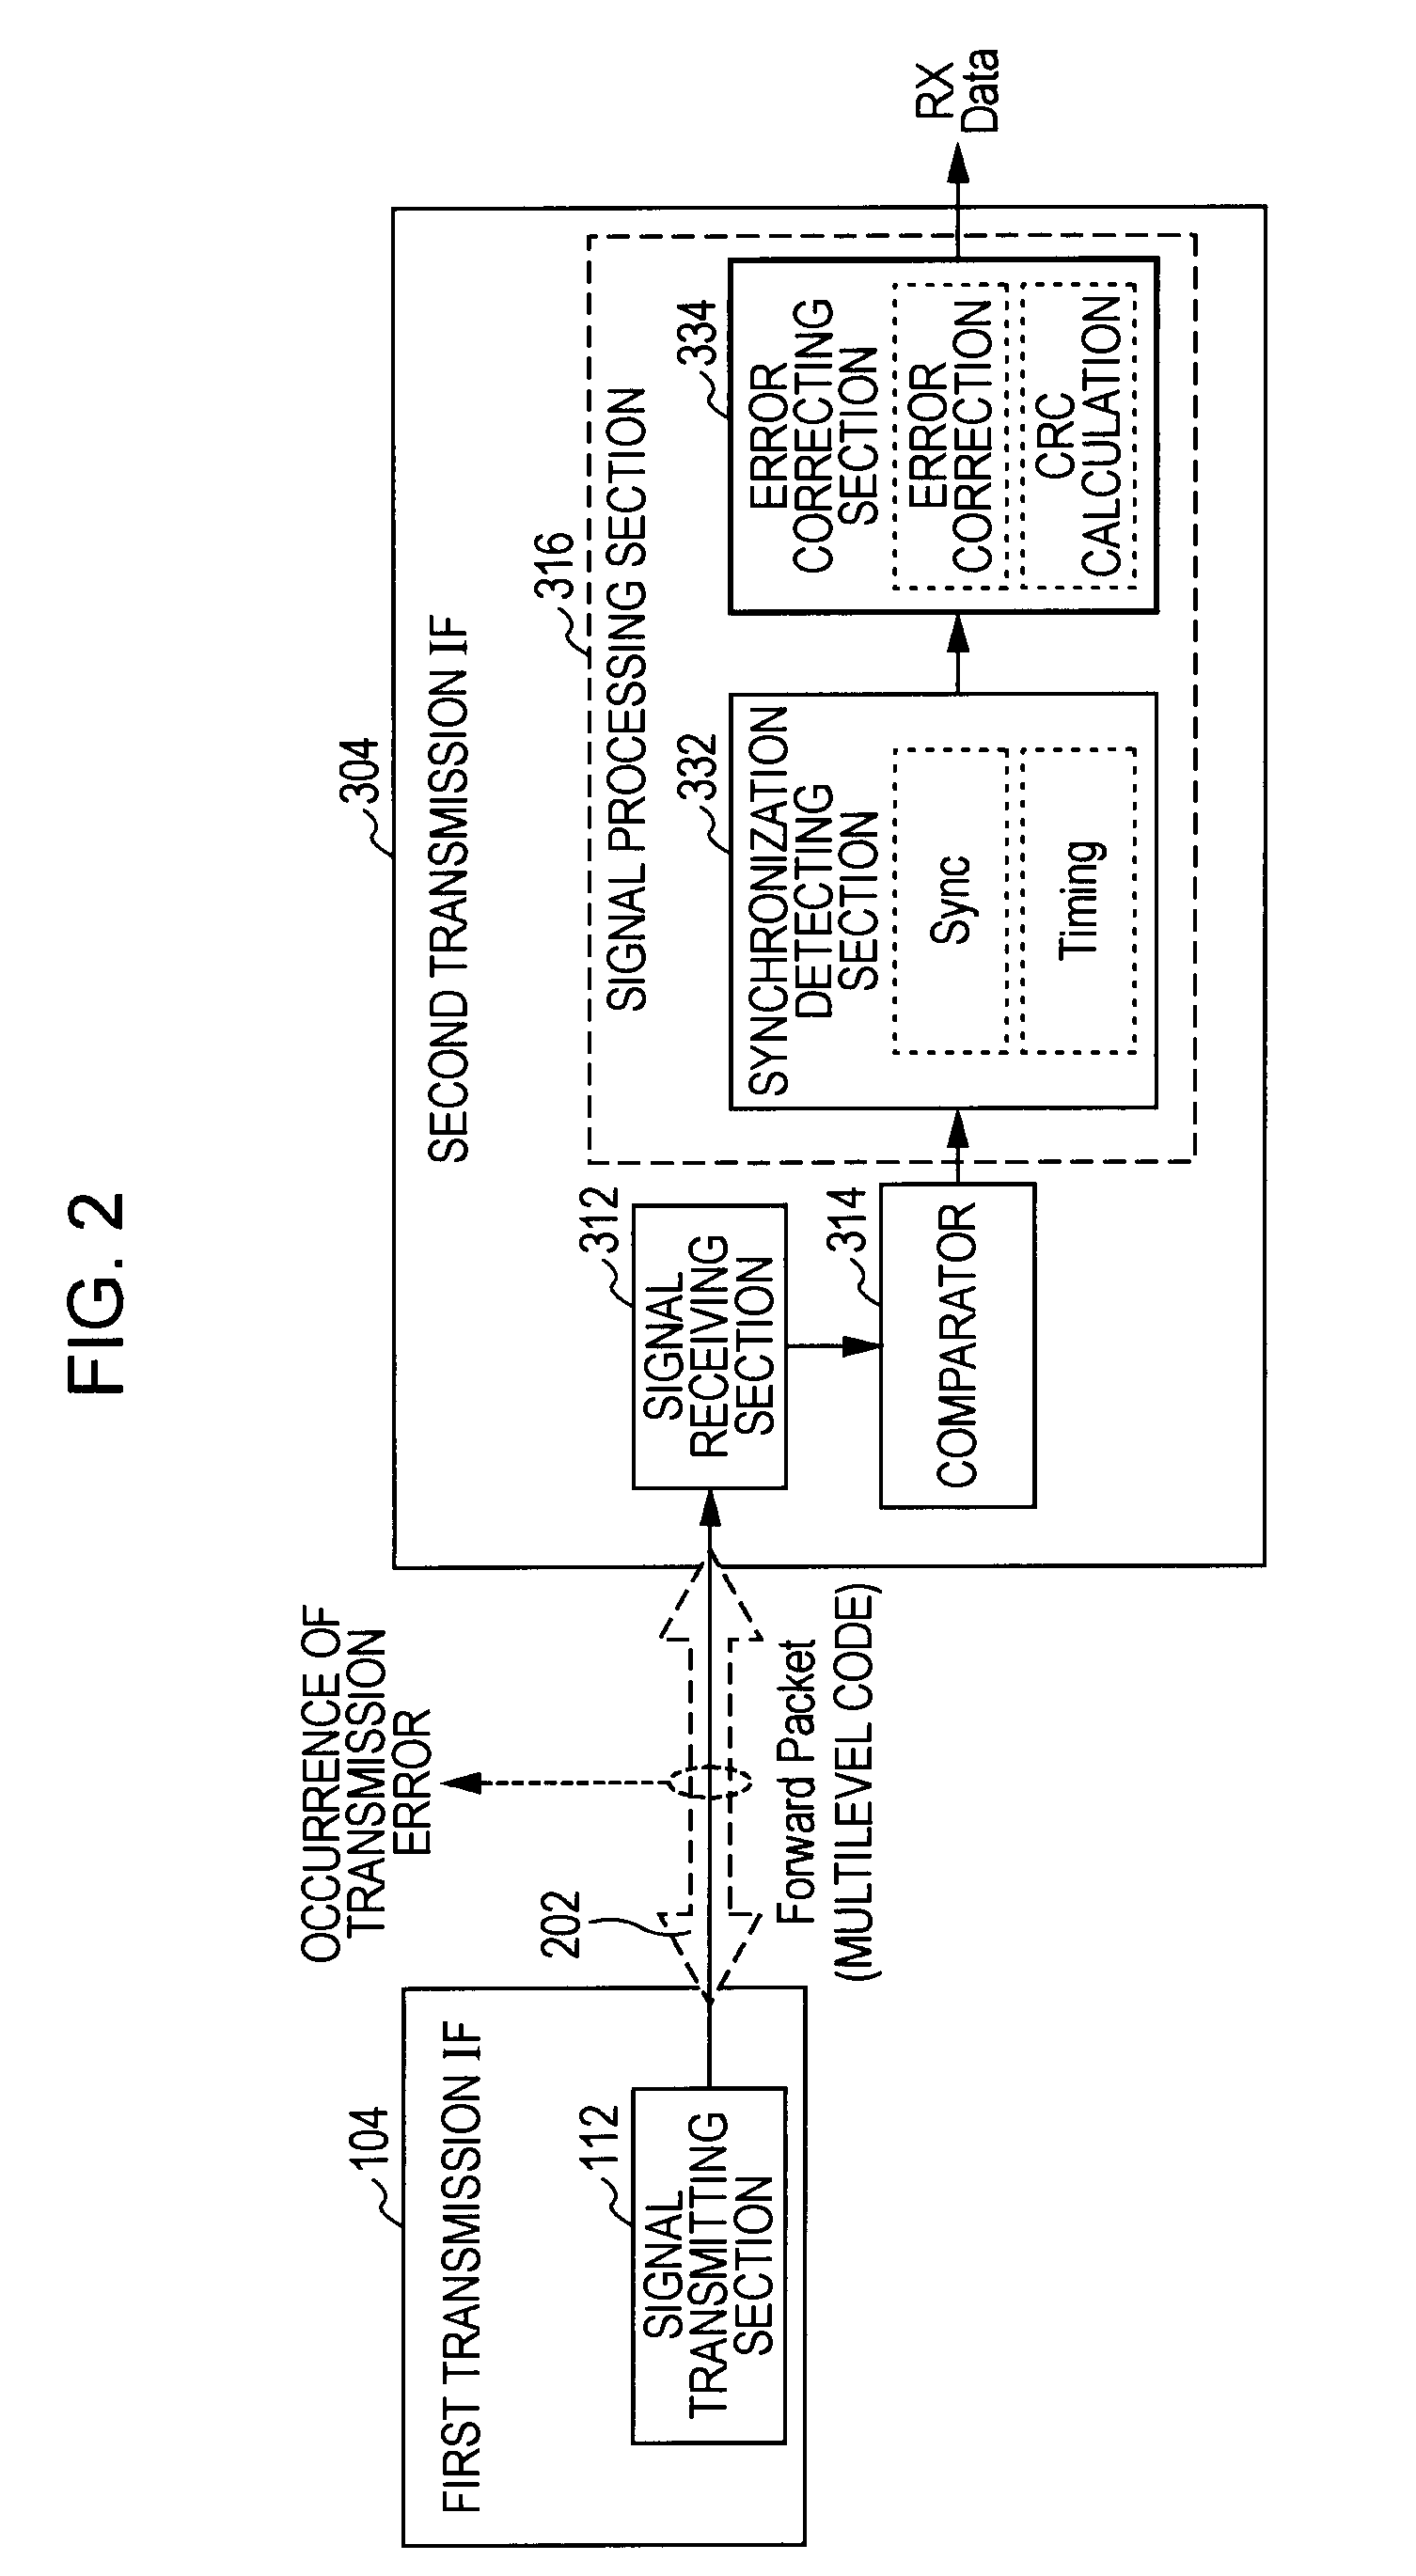 Signal processor and error correction process